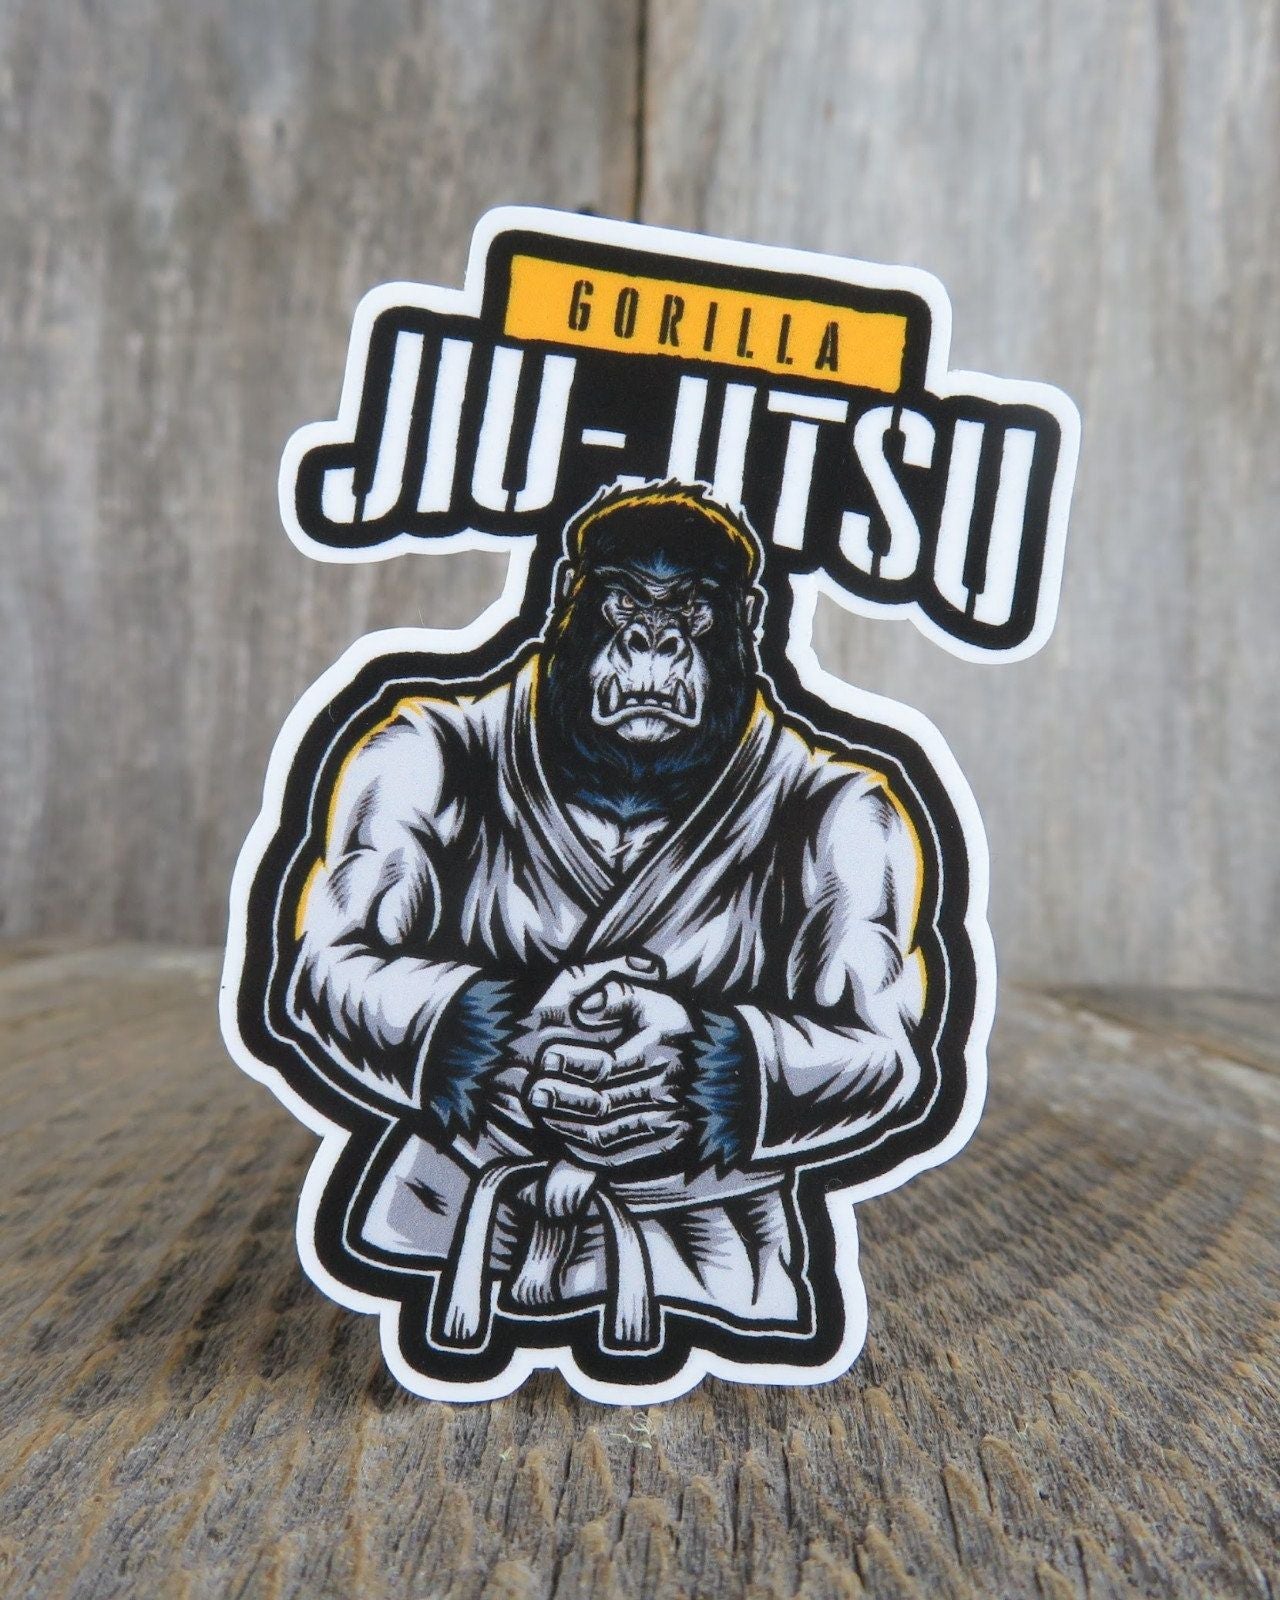 Gorilla Jiu Jitsu Sticker Martial Arts Waterproof Water Bottle Laptop